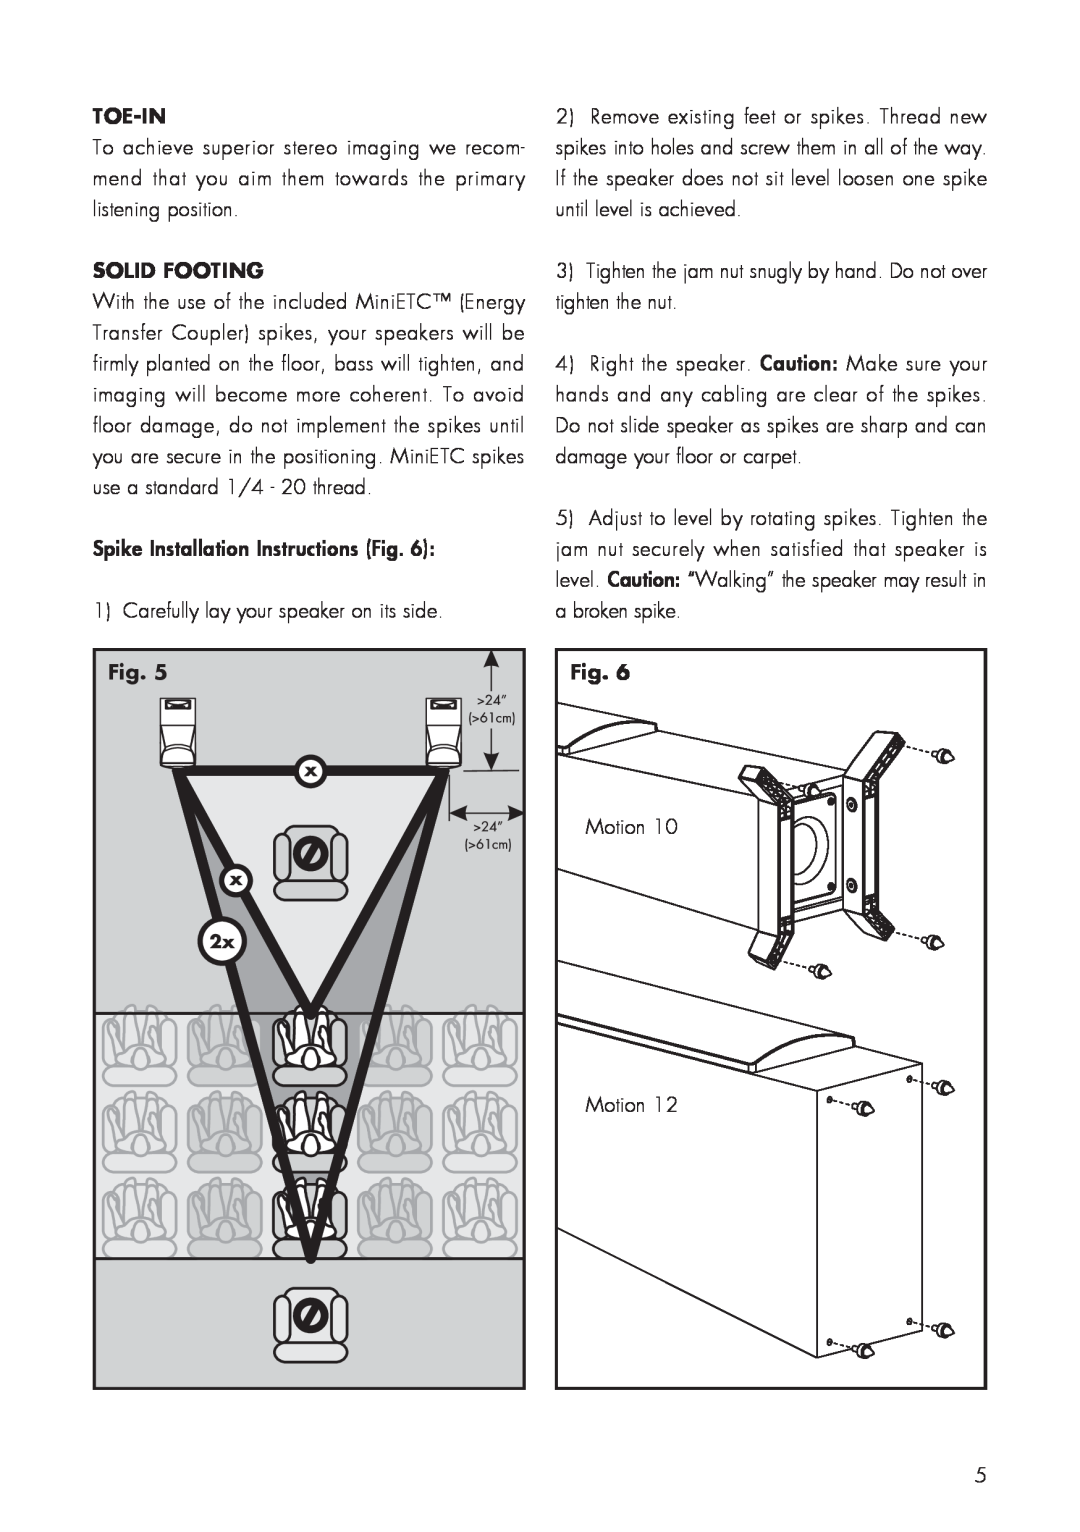 MartinLogan 10, 12 user manual Toe-In, Solid Footing, Fig 